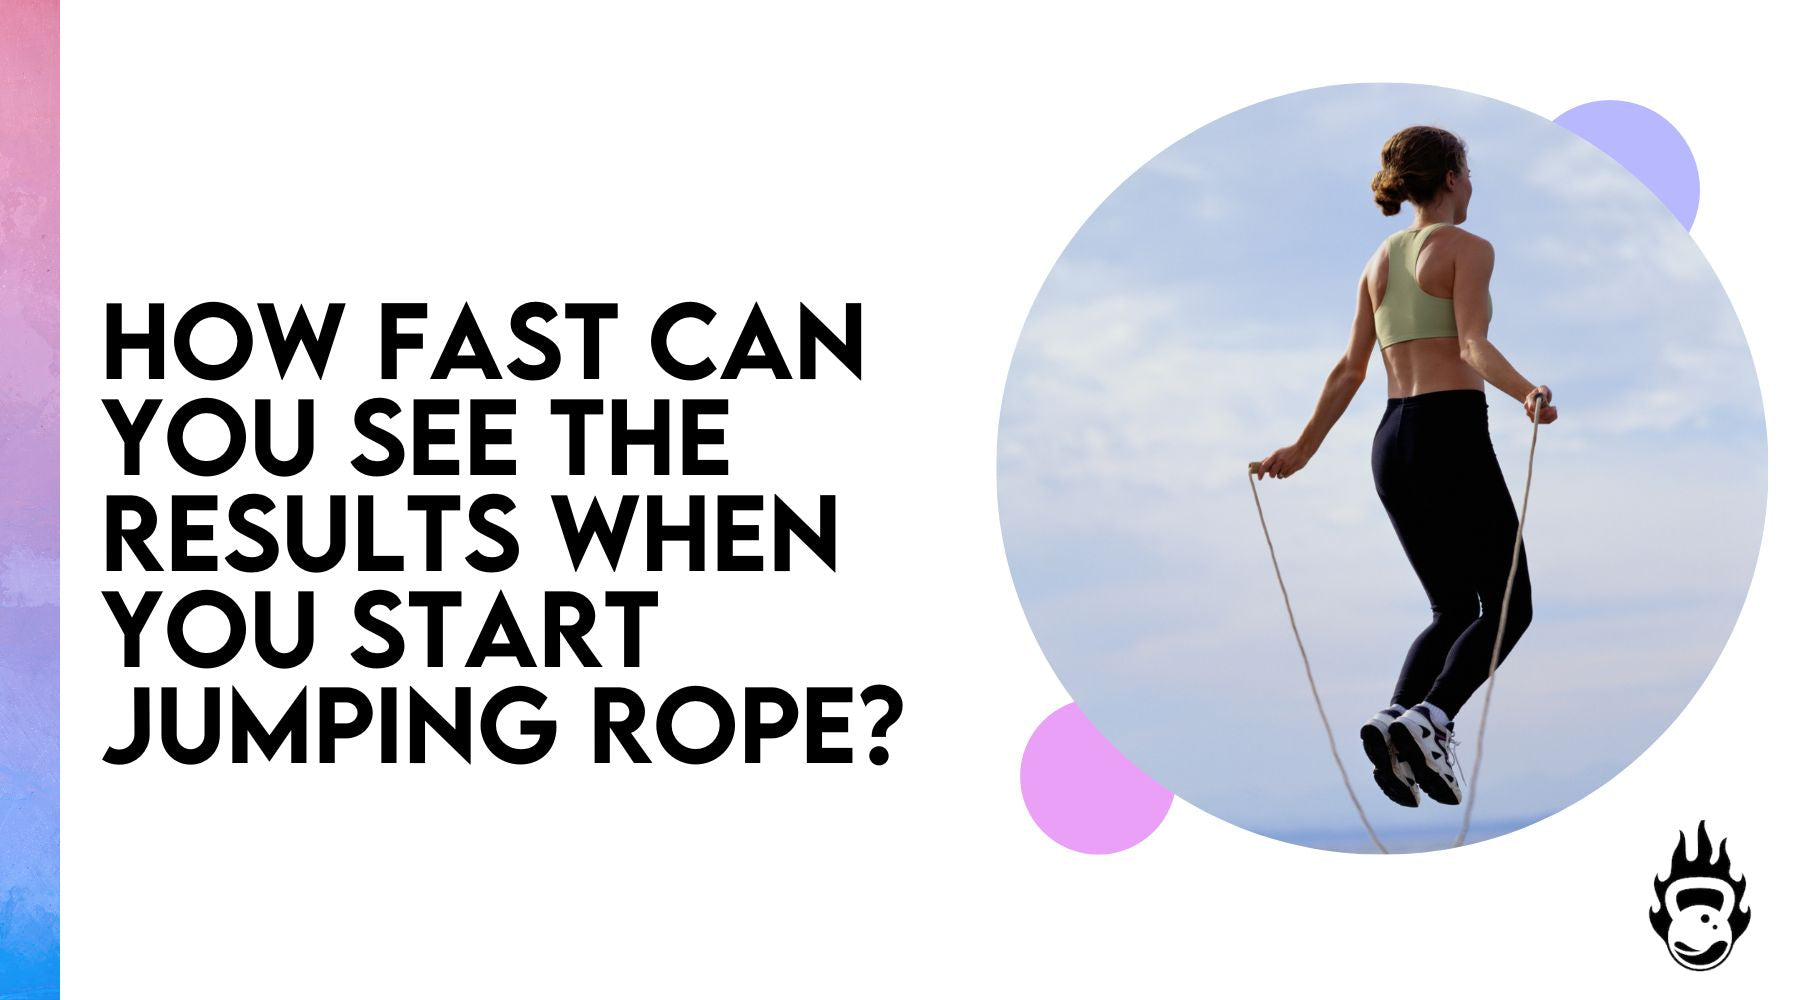 15 Amazing Health Benefits Of Skipping Rope